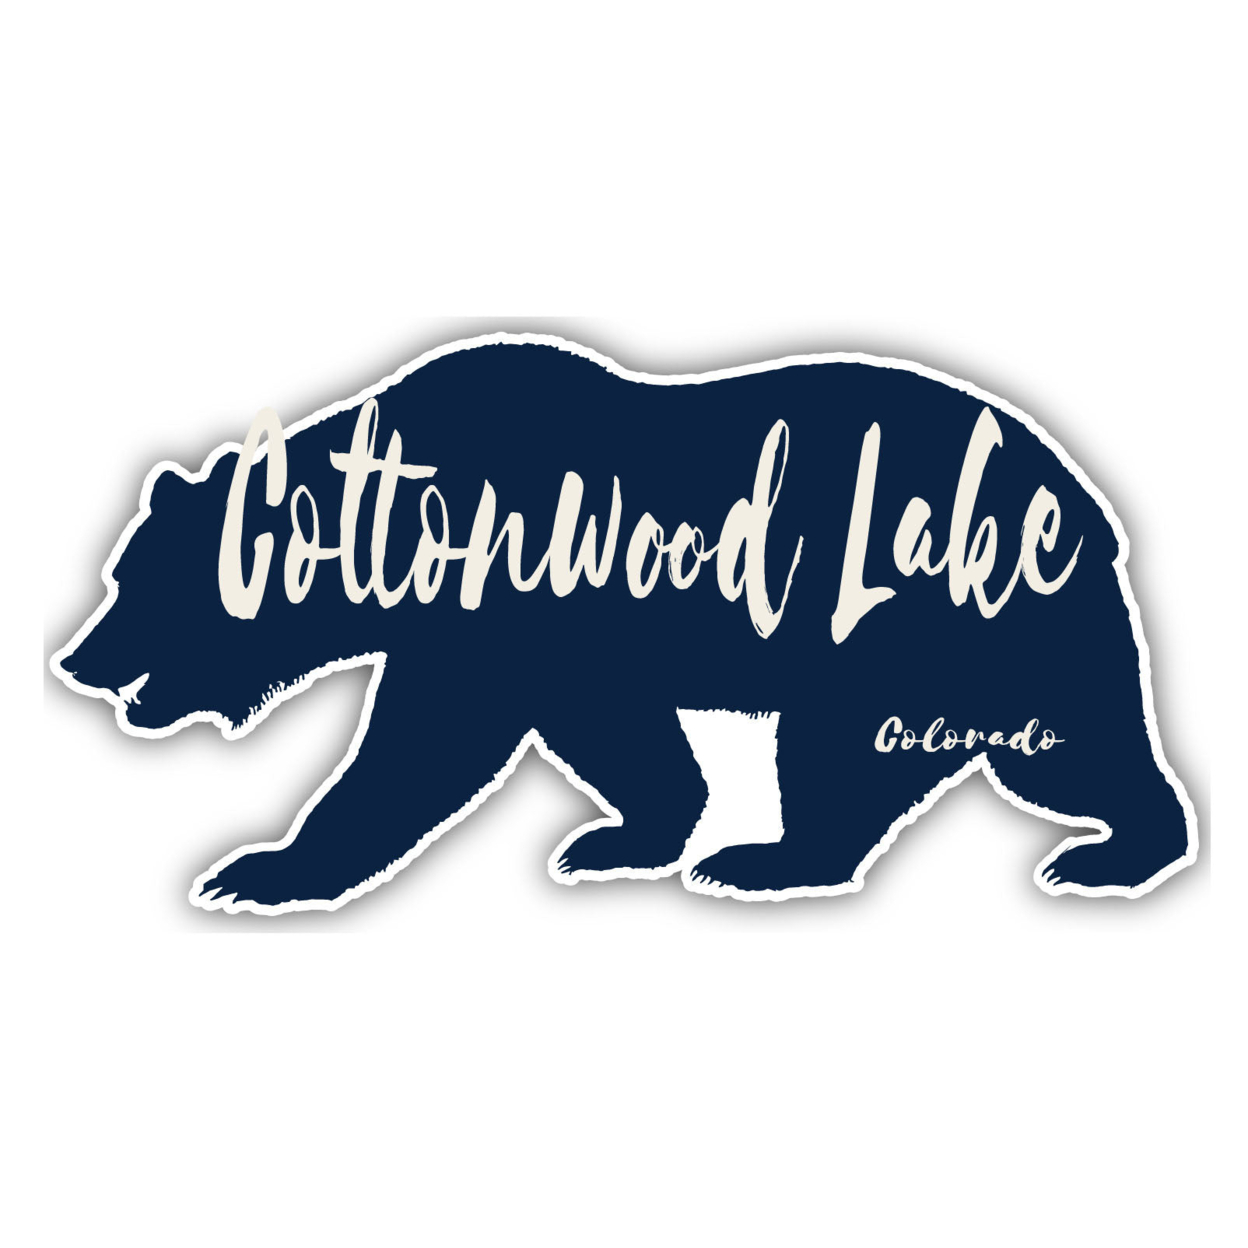 Cottonwood Lake Colorado Souvenir Decorative Stickers (Choose Theme And Size) - 4-Pack, 6-Inch, Bear